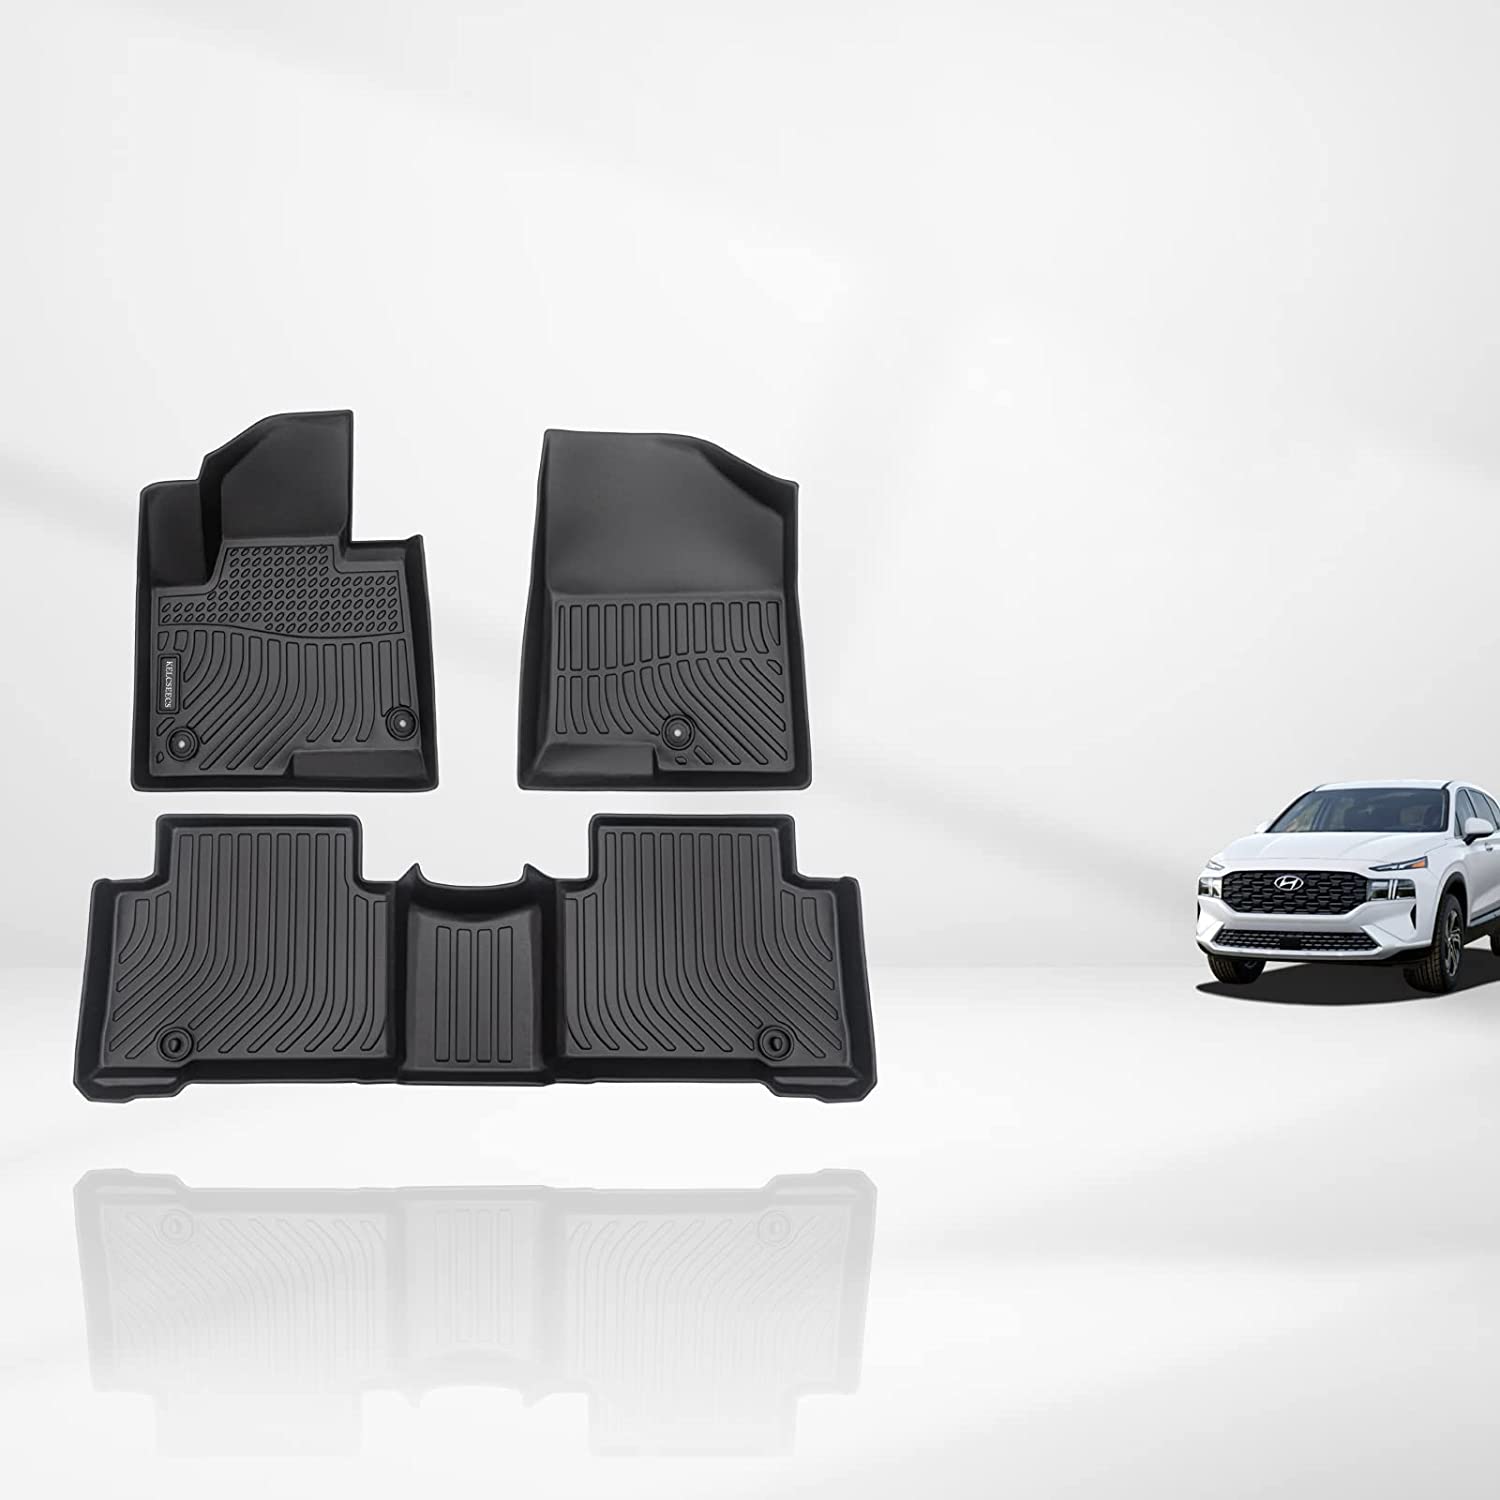 Kelcseecs All Weather 3D Tech Design TPE Car Floor Mats Floor Liners For Hyundai Santa Fe Sport 2013-2018